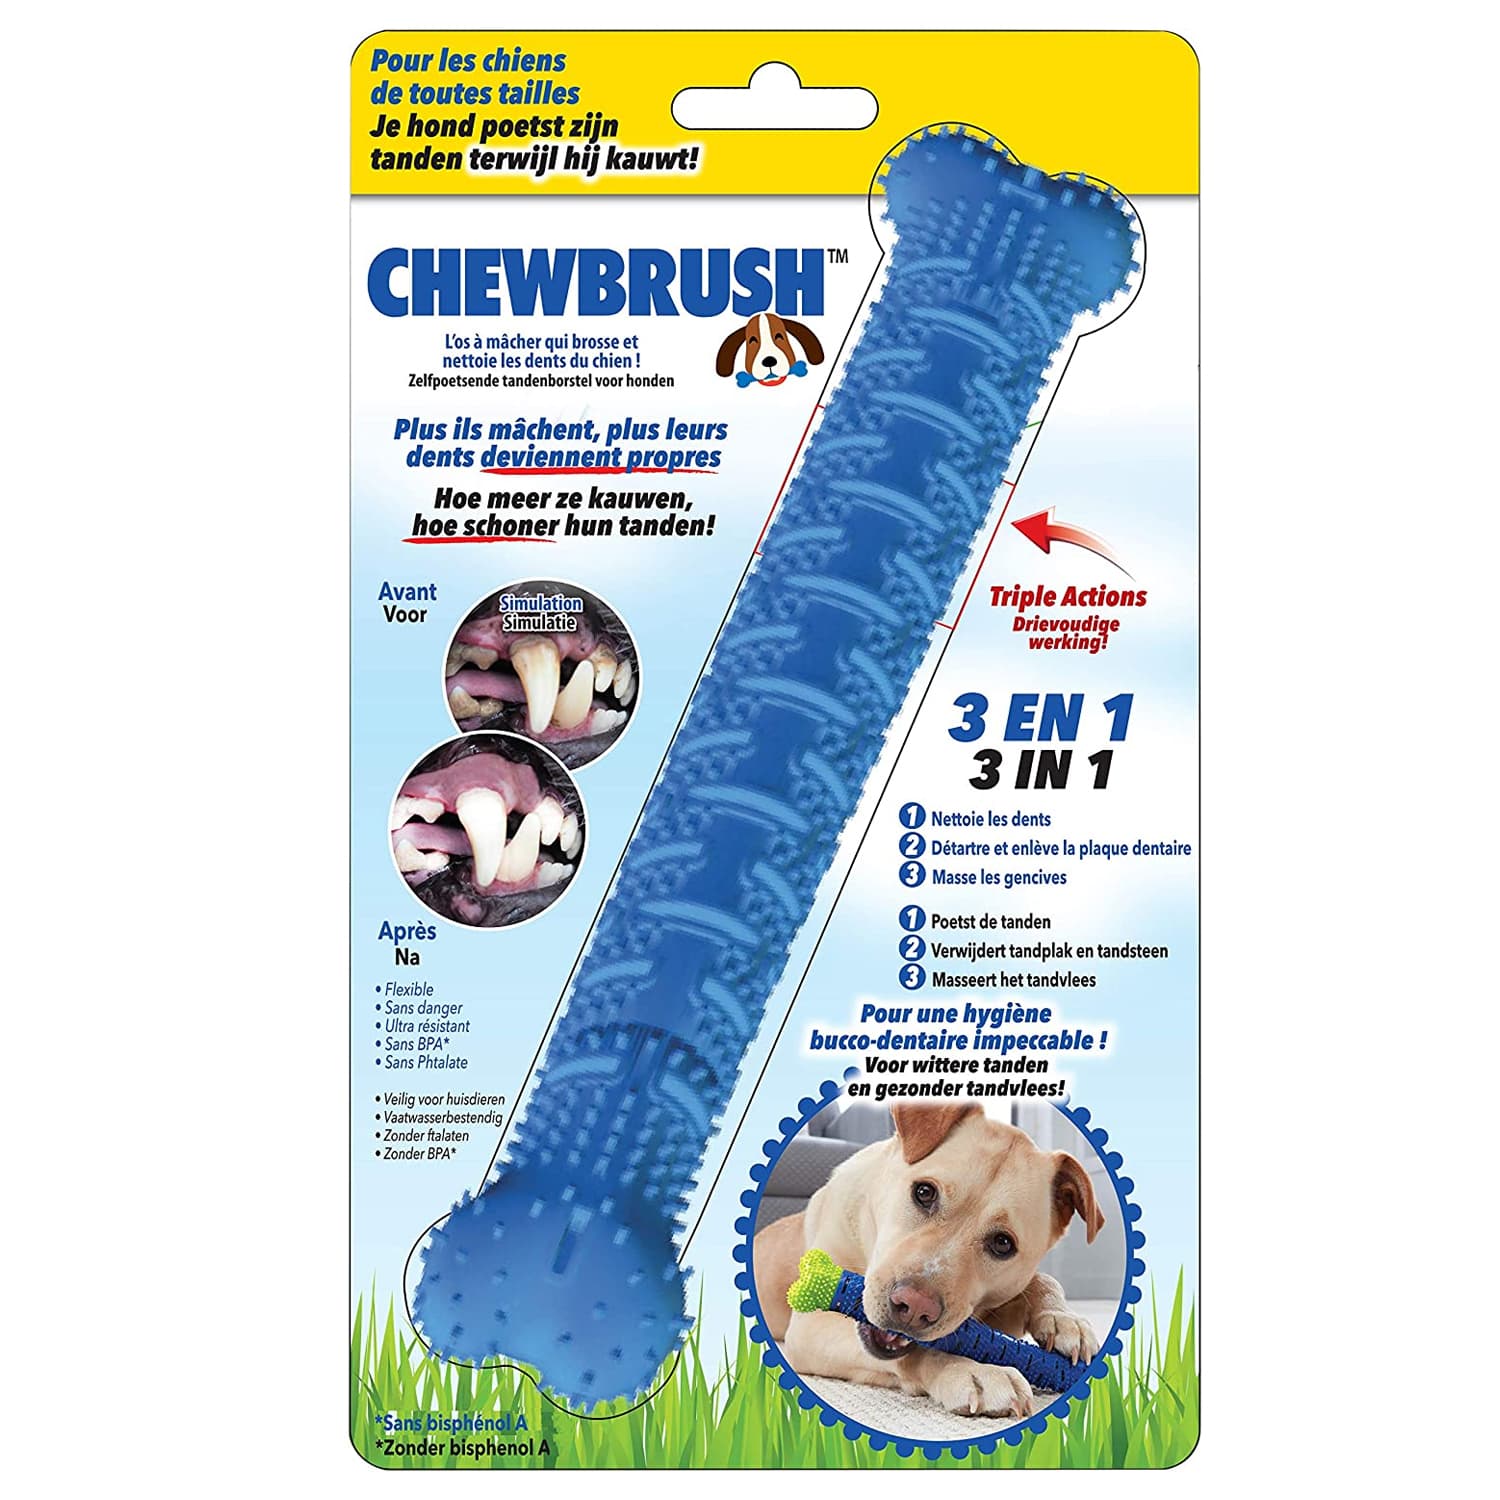 Chewbrush os a macher brosse nettoie dents chien large sales plaque dentaire tartre laver hygiene buccodentaire animal jouet gencives massage 01-min